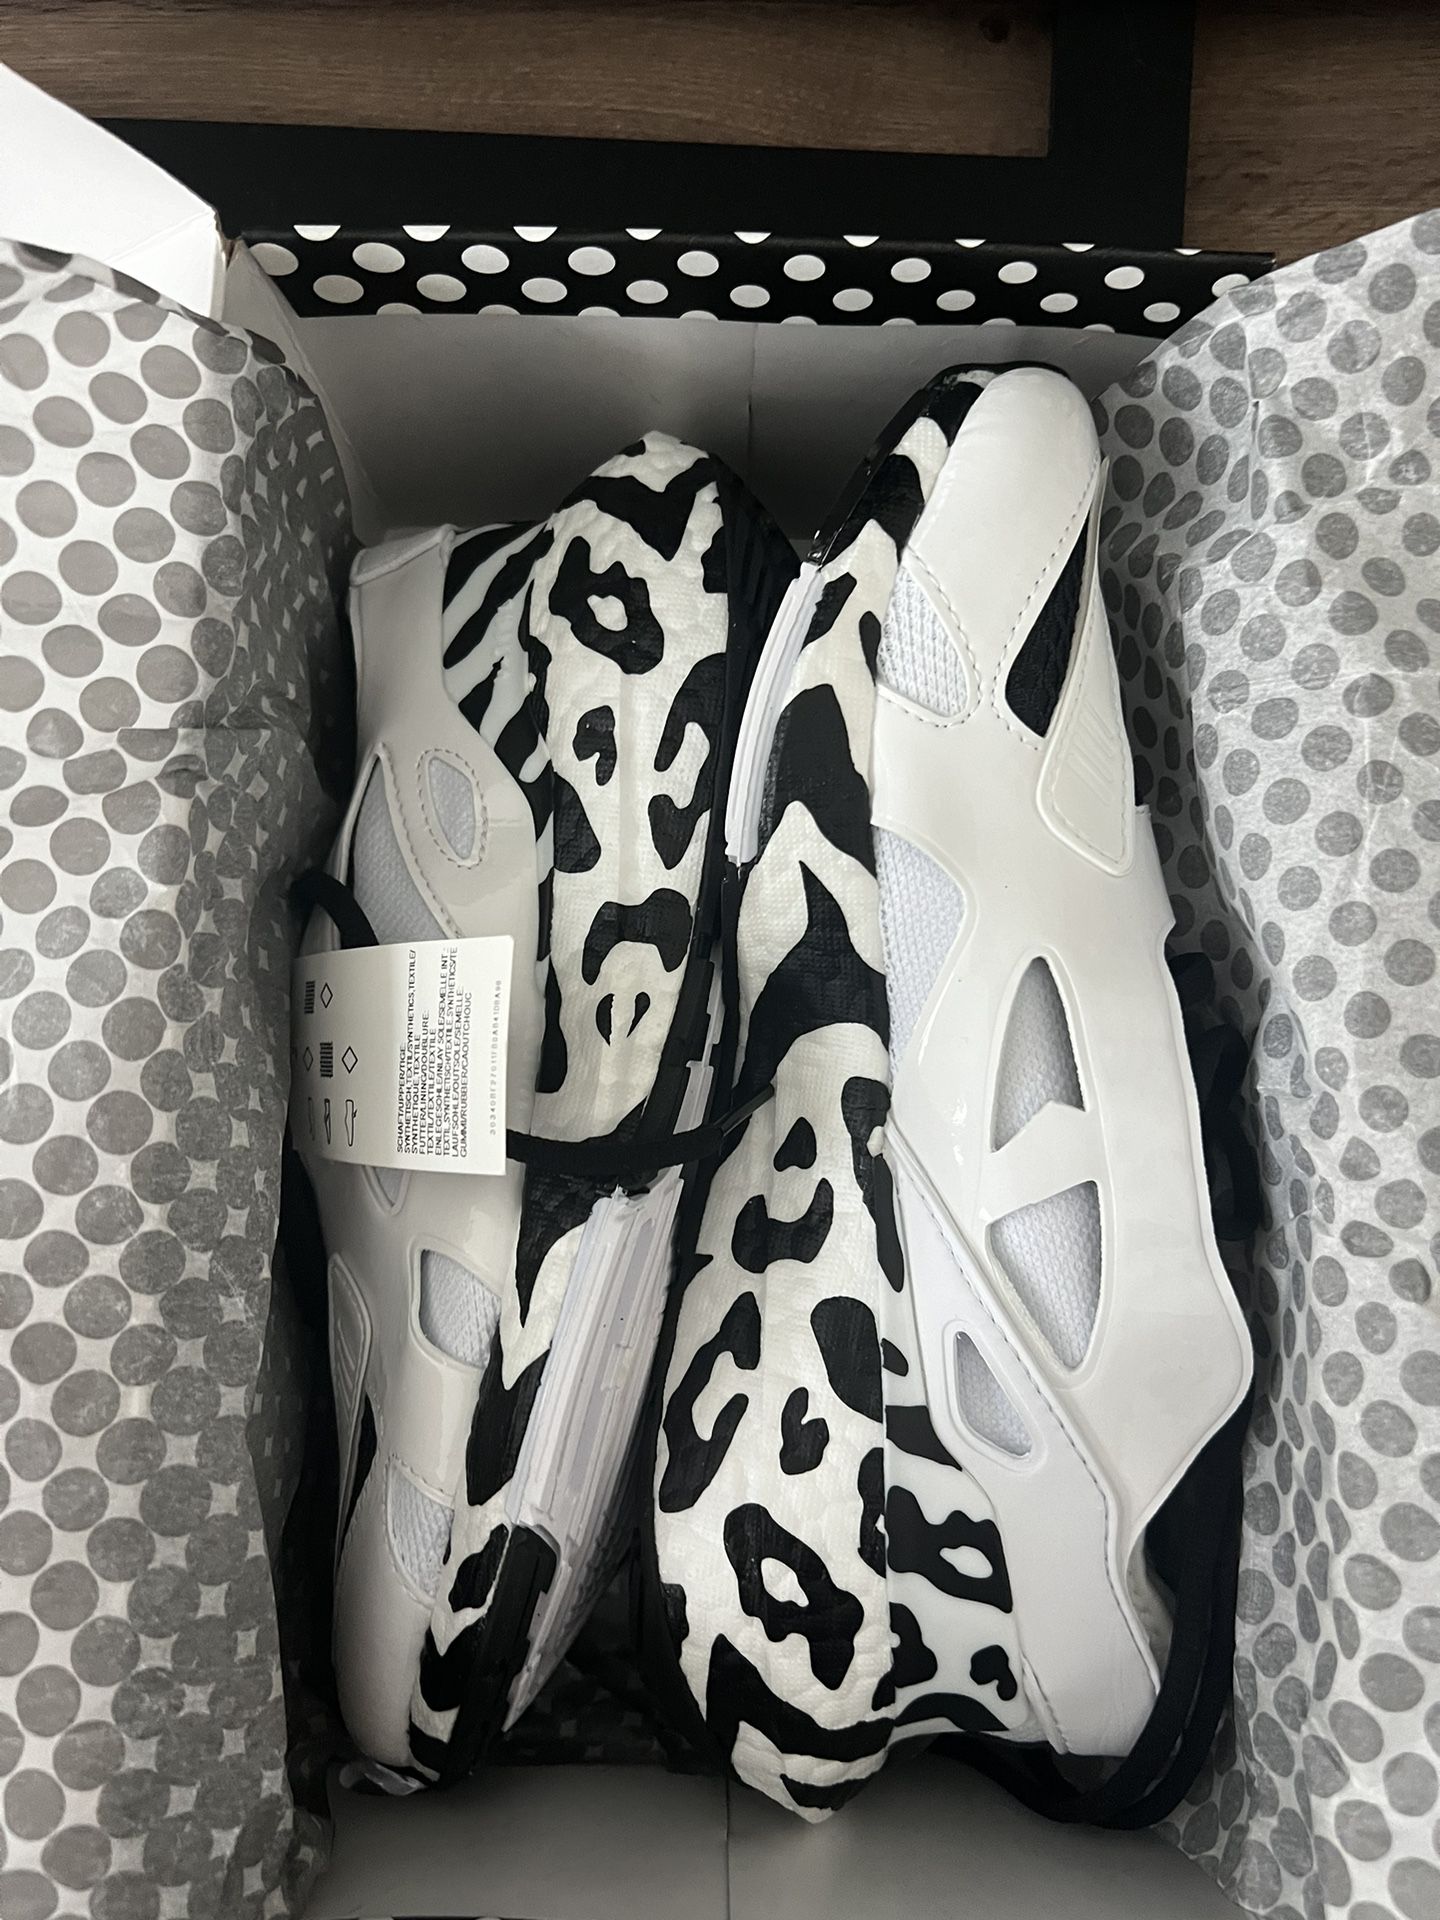 adidas Stella McCartney Ultraboost Running White Zebra Shoes Rare Women Size 7US